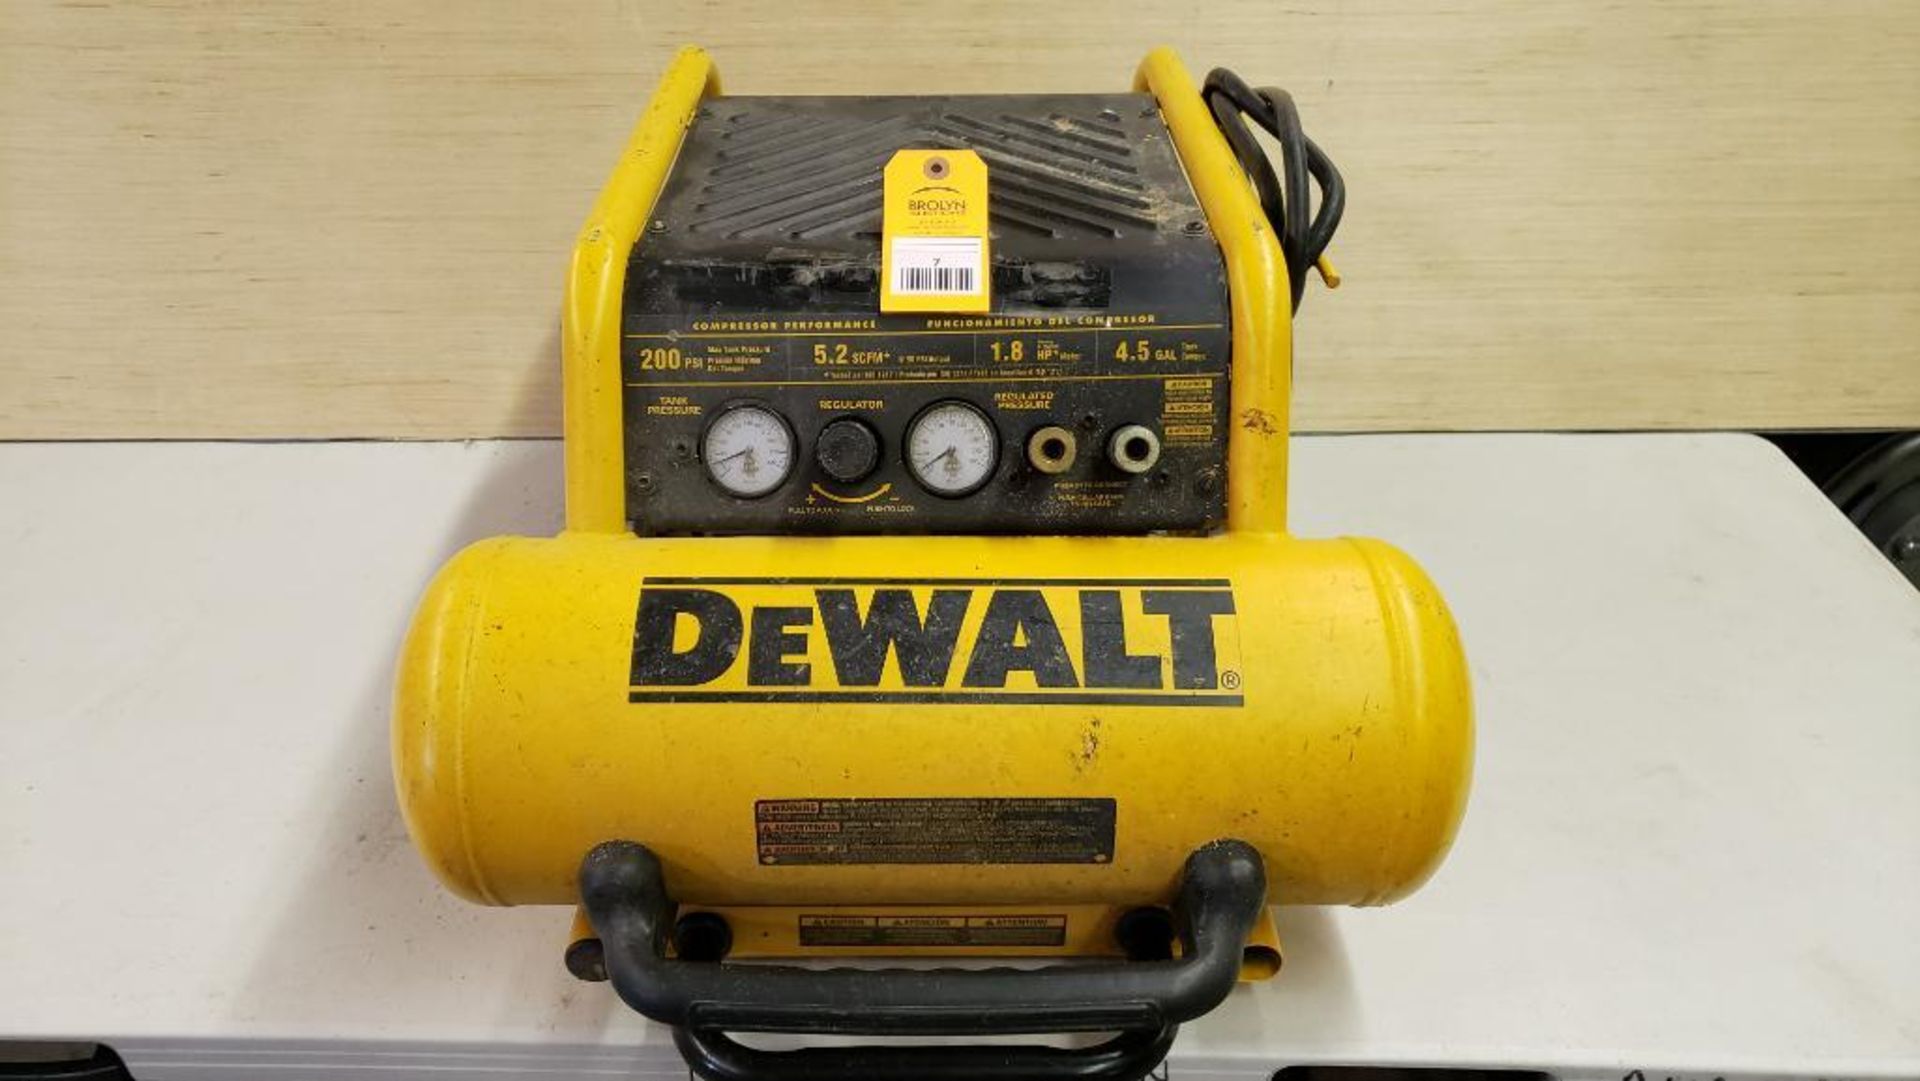 DeWalt D55146 electric 4.5 gal wheeled portable compressor.